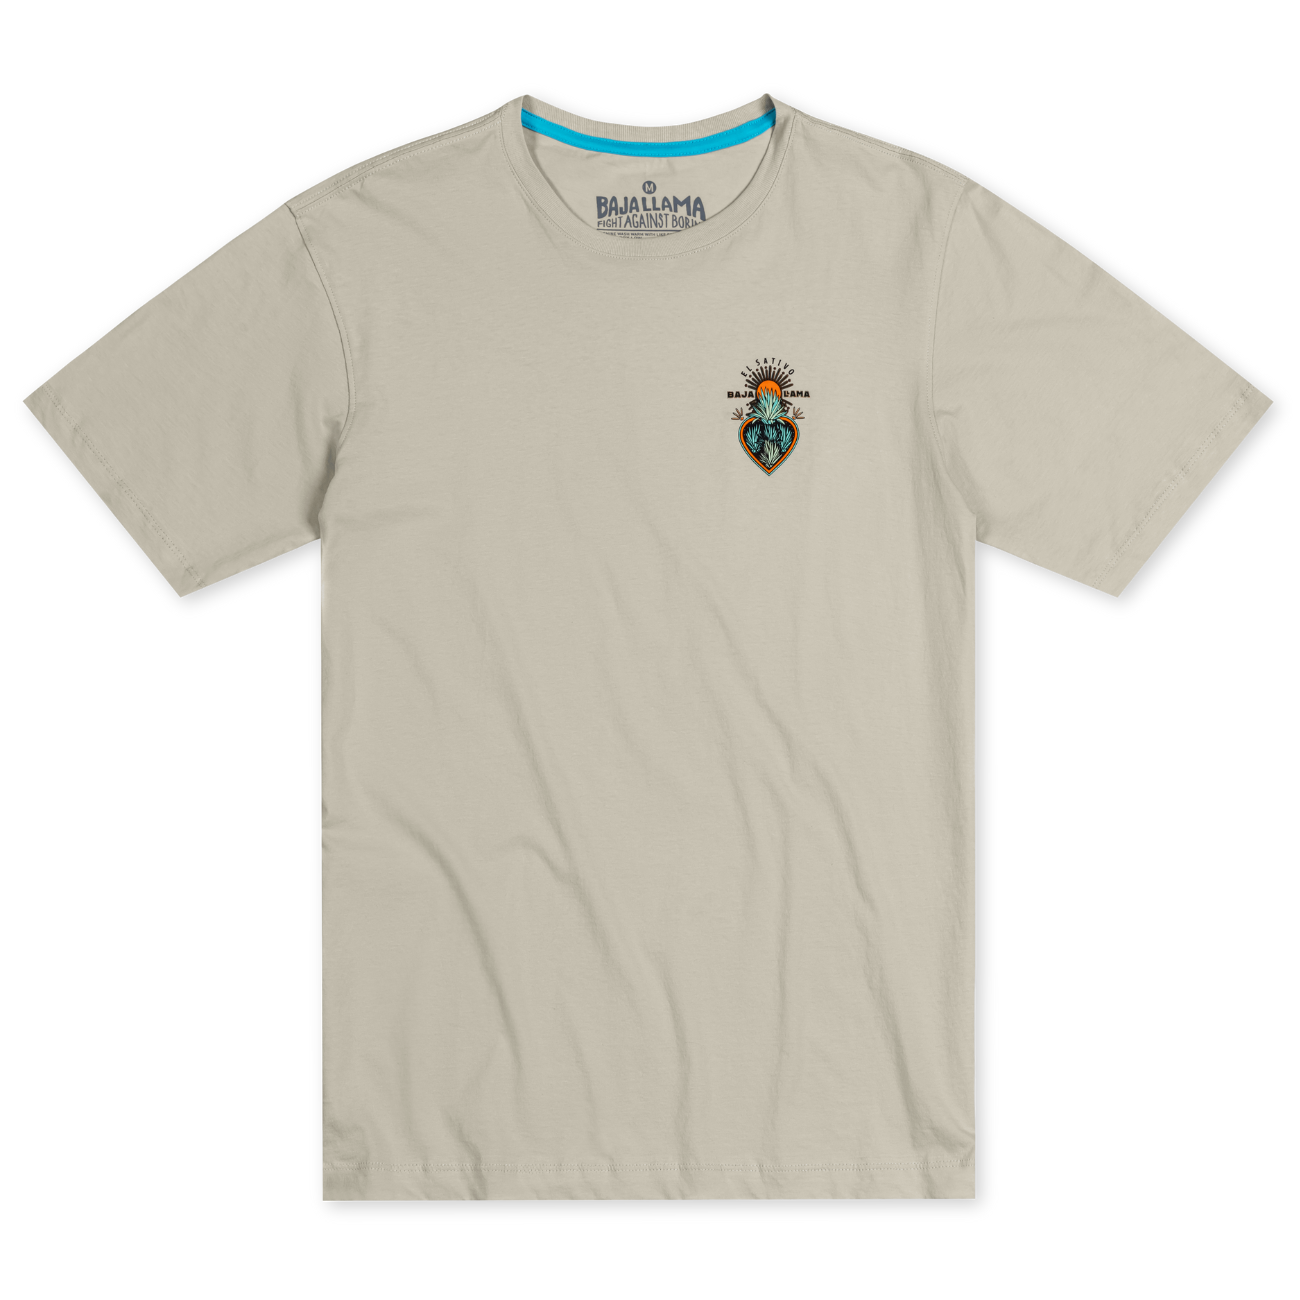 Baja Llama x El Sativo Collection Agave Cream T-Shirt